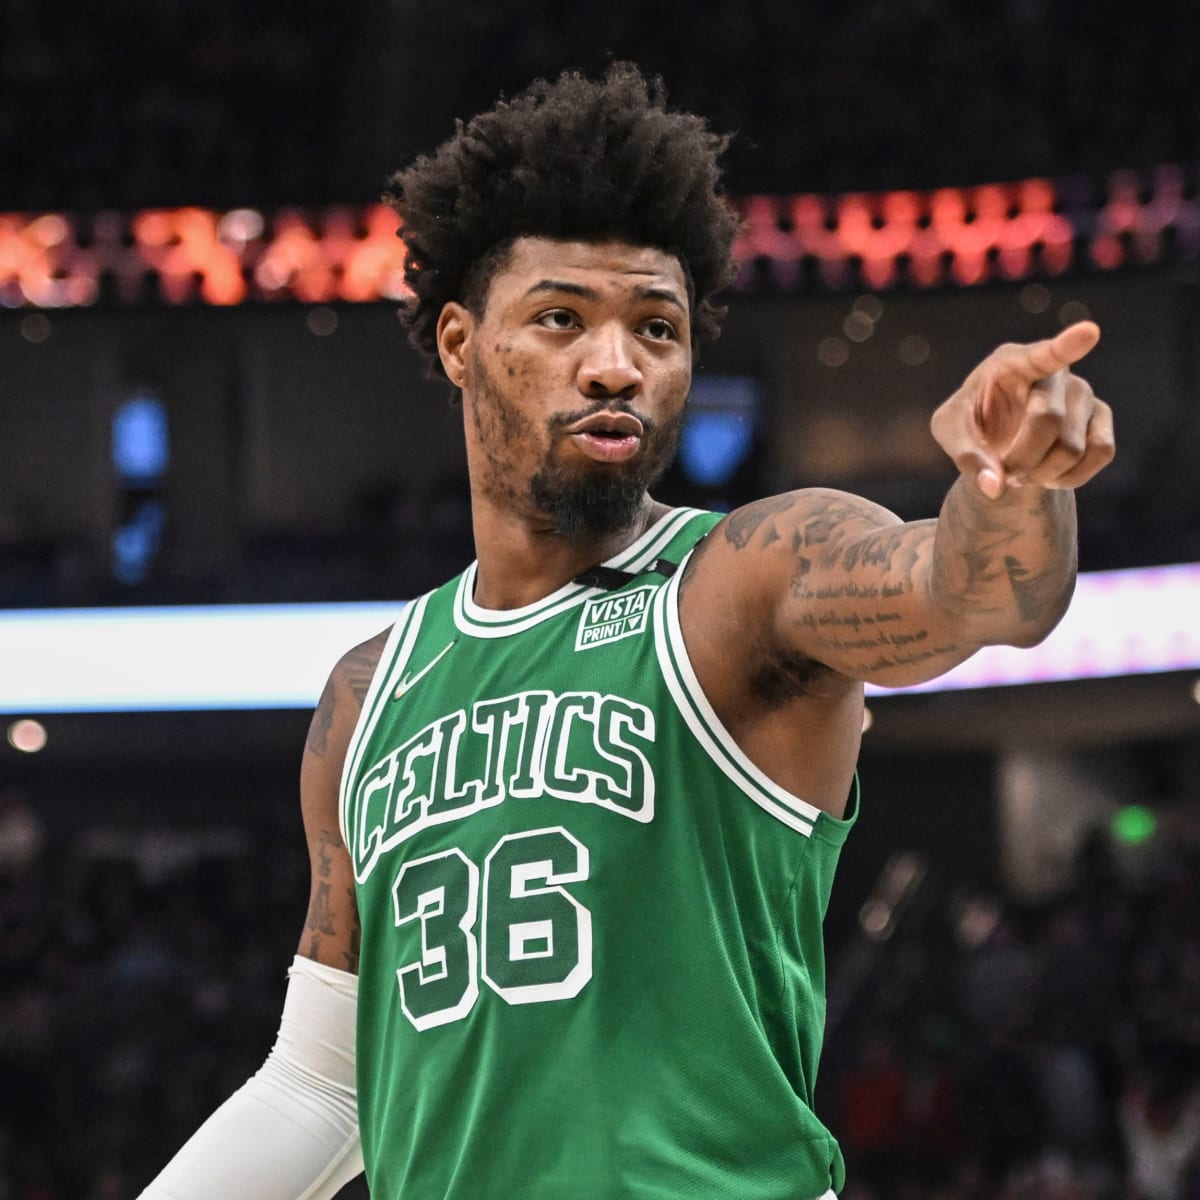 Celtics' Marcus Smart Has Been Extra Cautious During Coronavirus